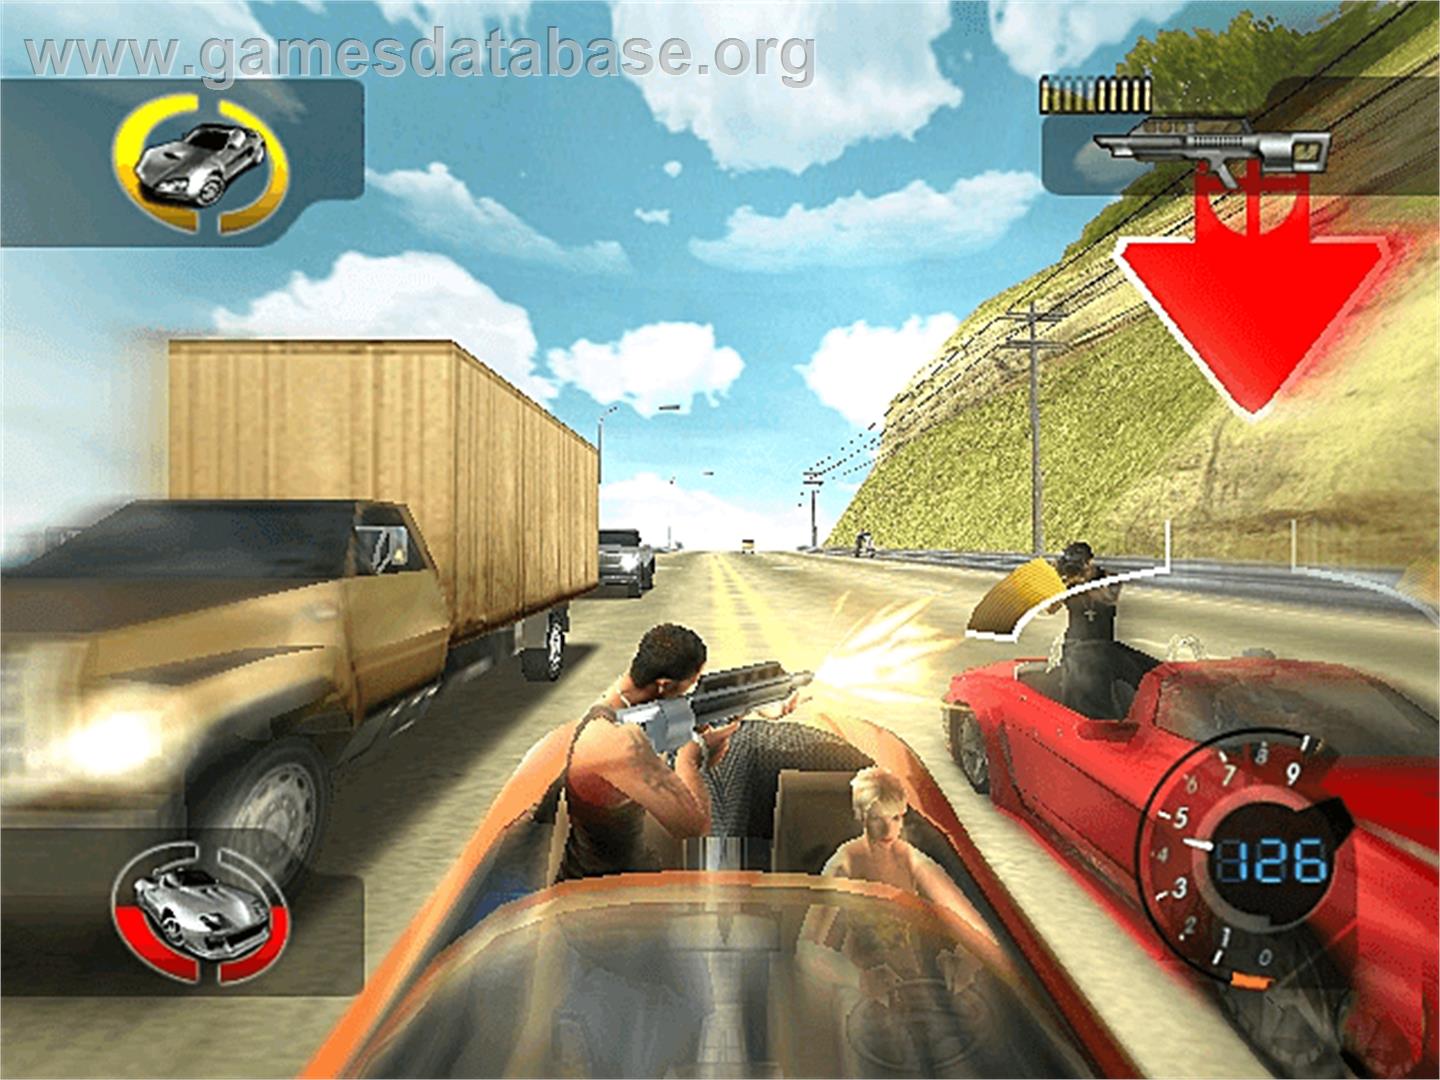 187: Ride or Die - Microsoft Xbox - Artwork - In Game